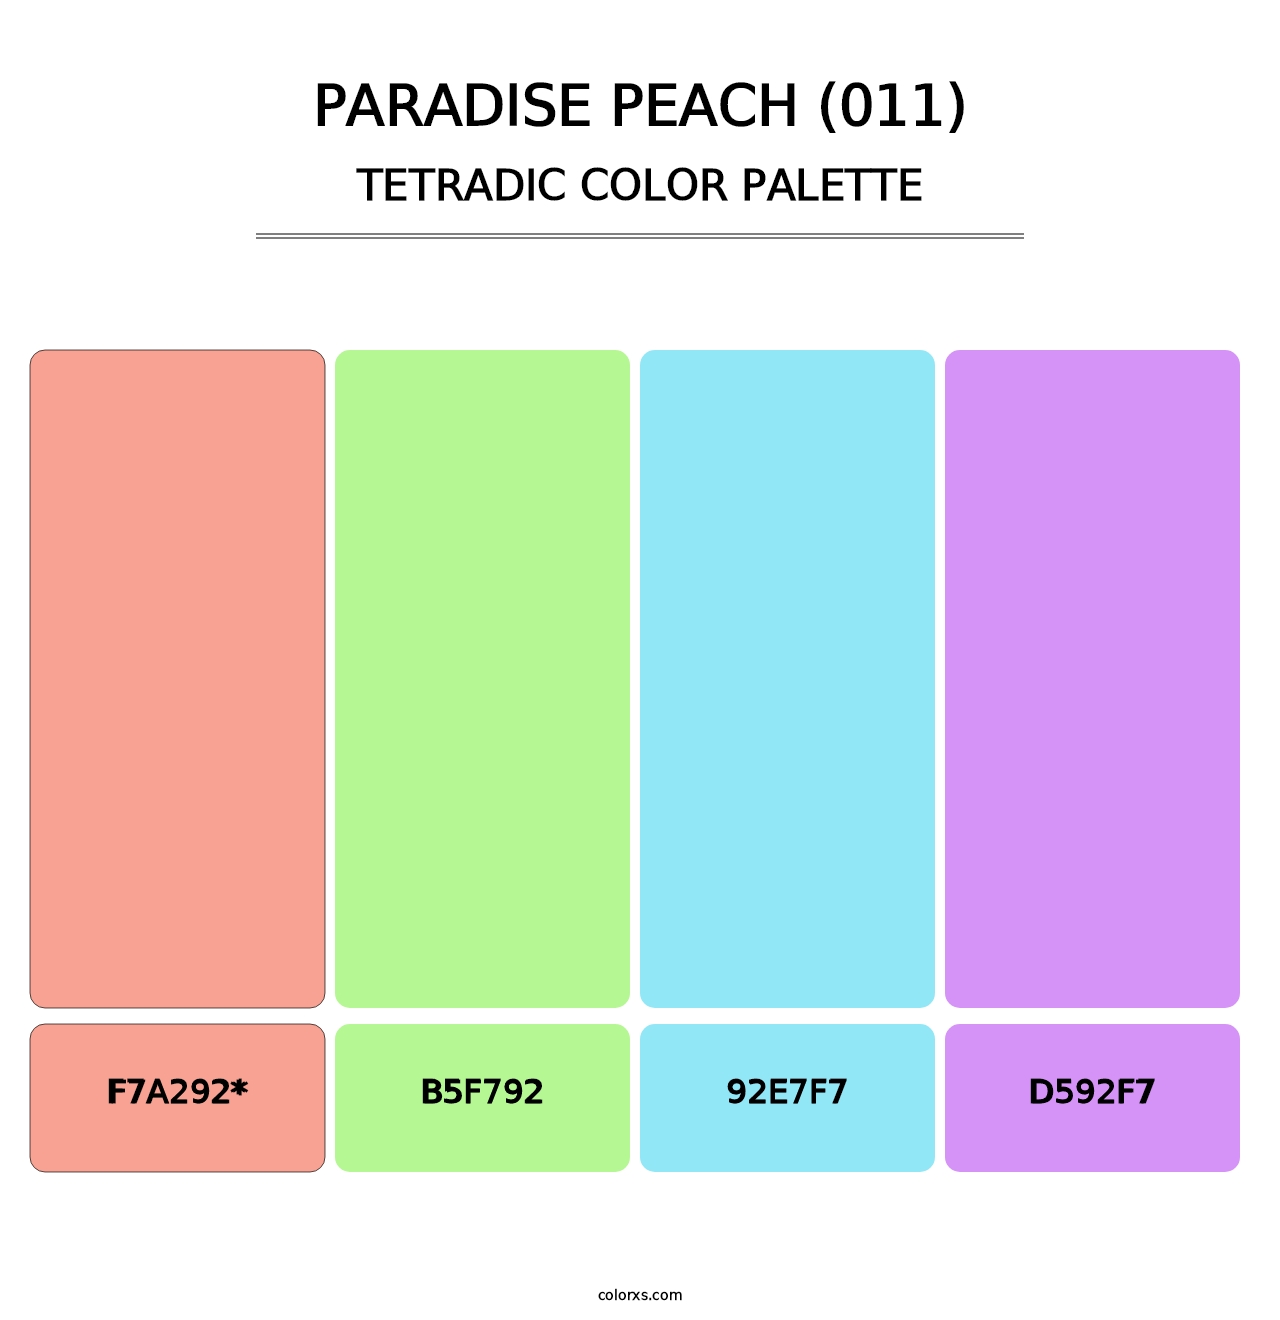 Paradise Peach (011) - Tetradic Color Palette